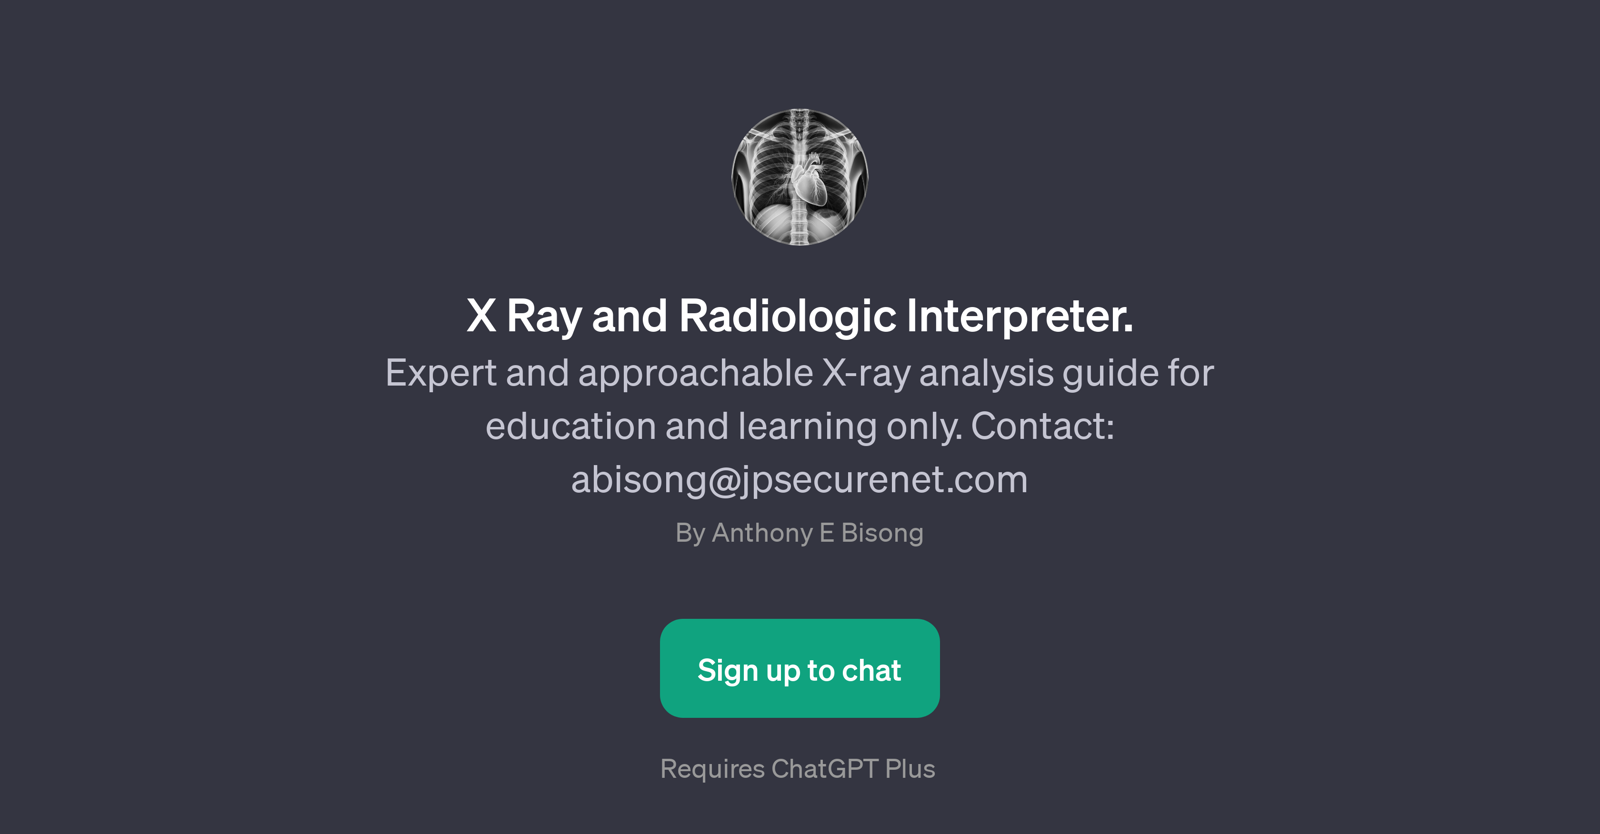 X Ray and Radiologic Interpreter website